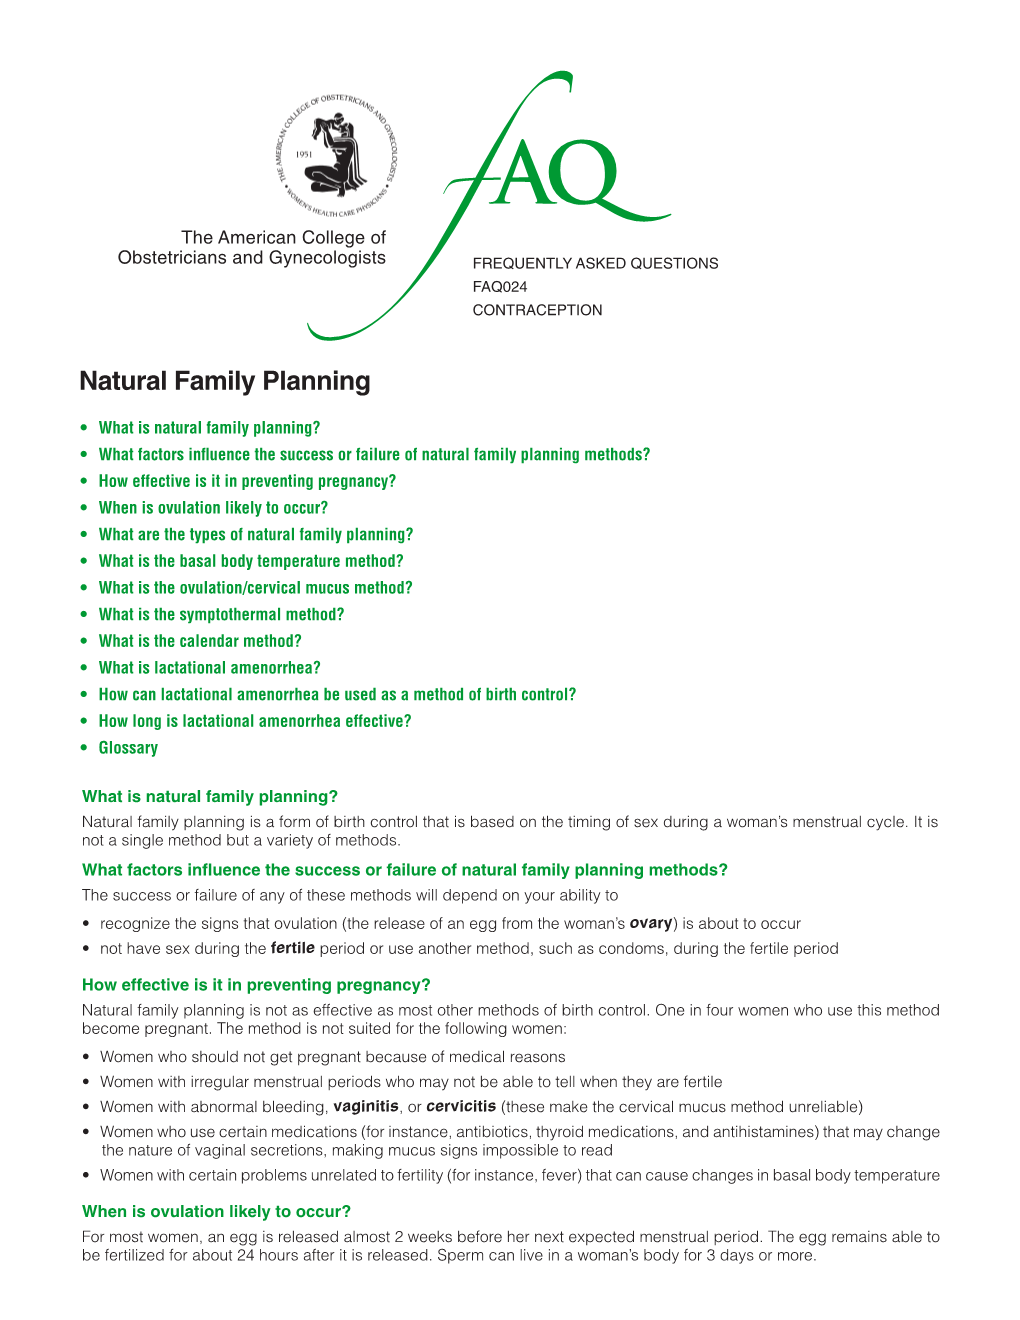 FAQ024 -- Natural Family Planning